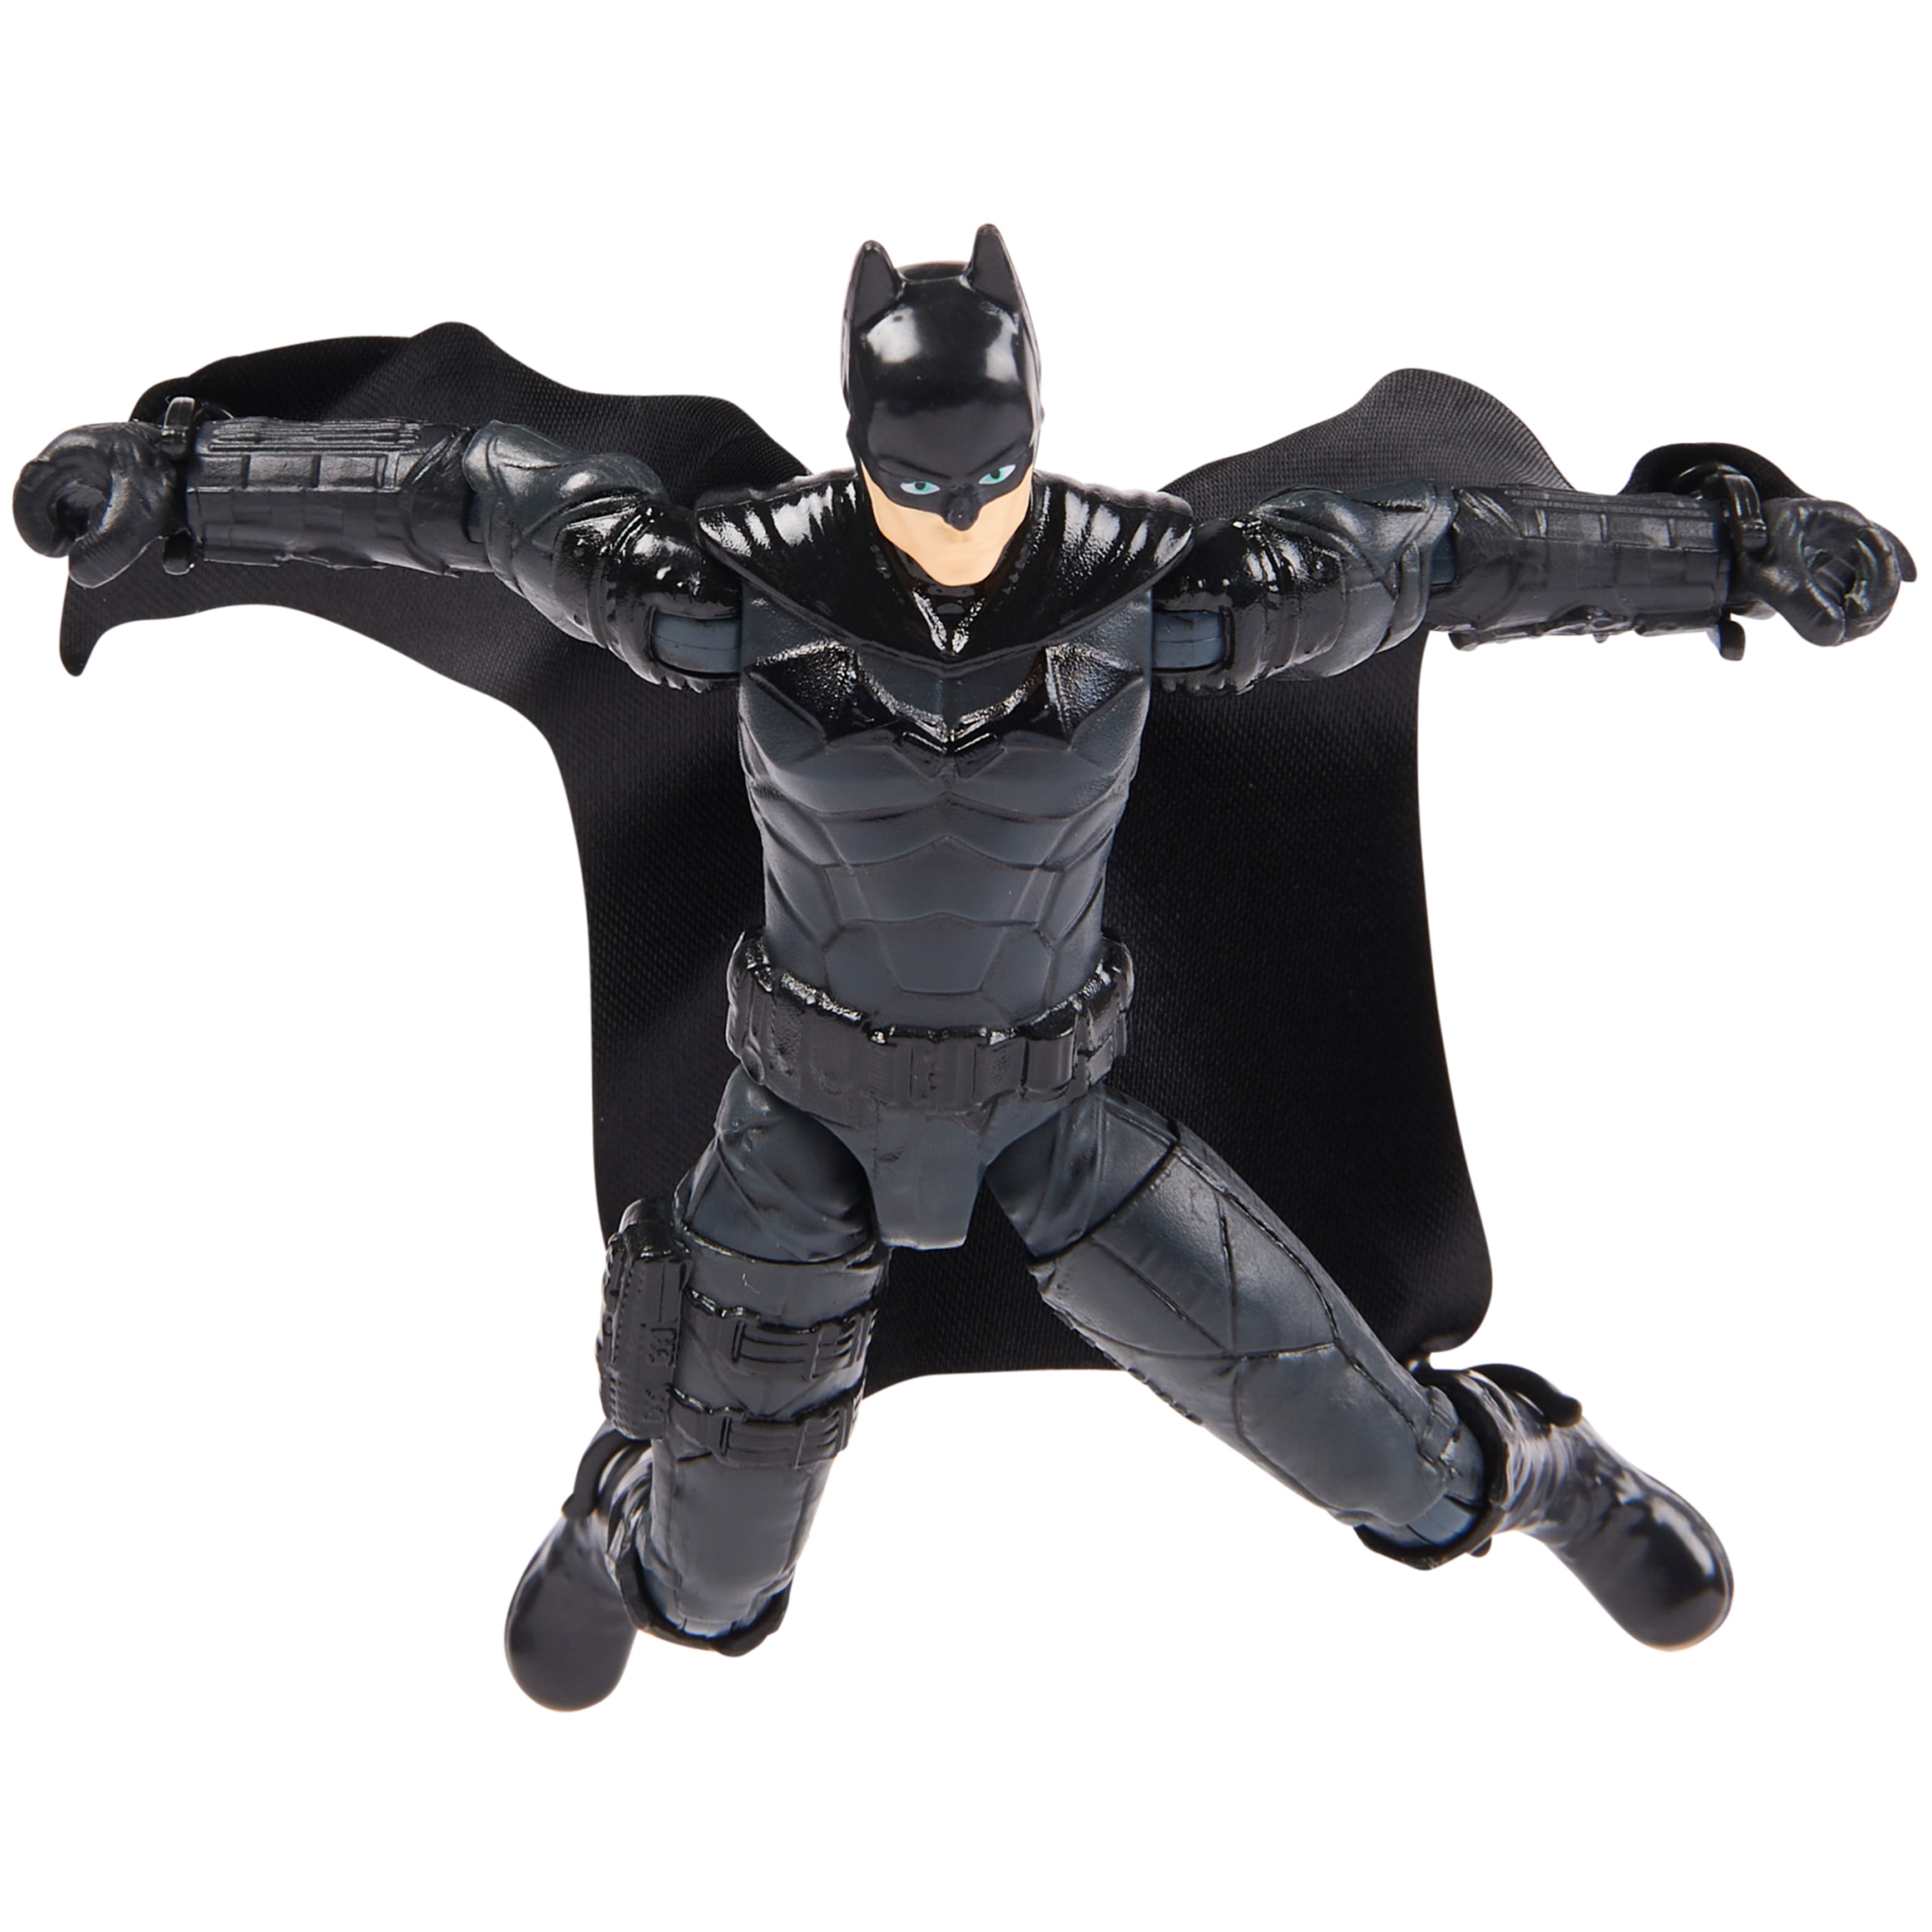 DC Comics Wingsuit Batman 4-inch Action Figure with 3 Accessories